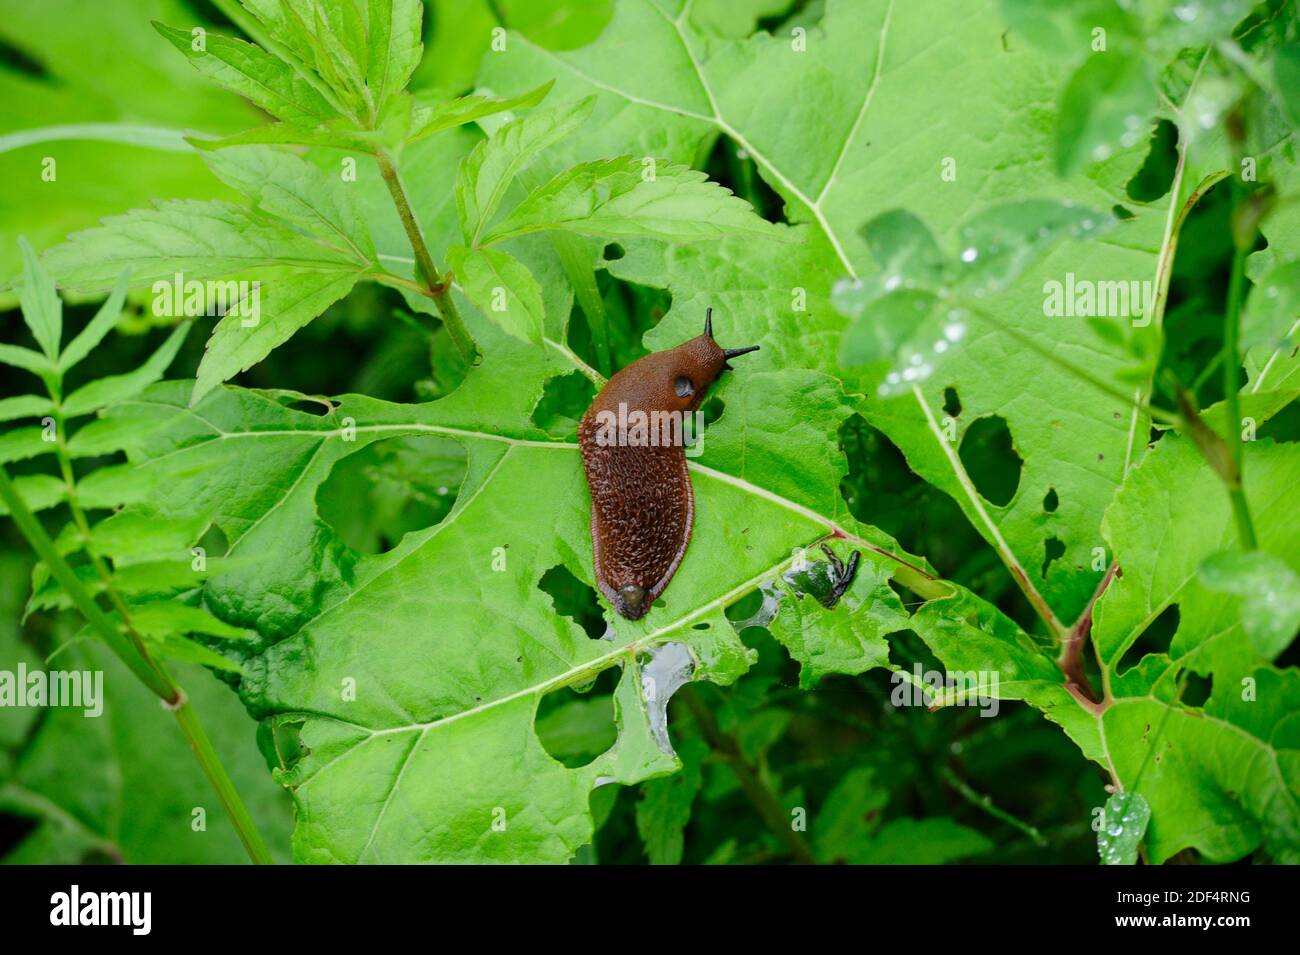 a brown spanish slug on a green leave after rain Stock Photo